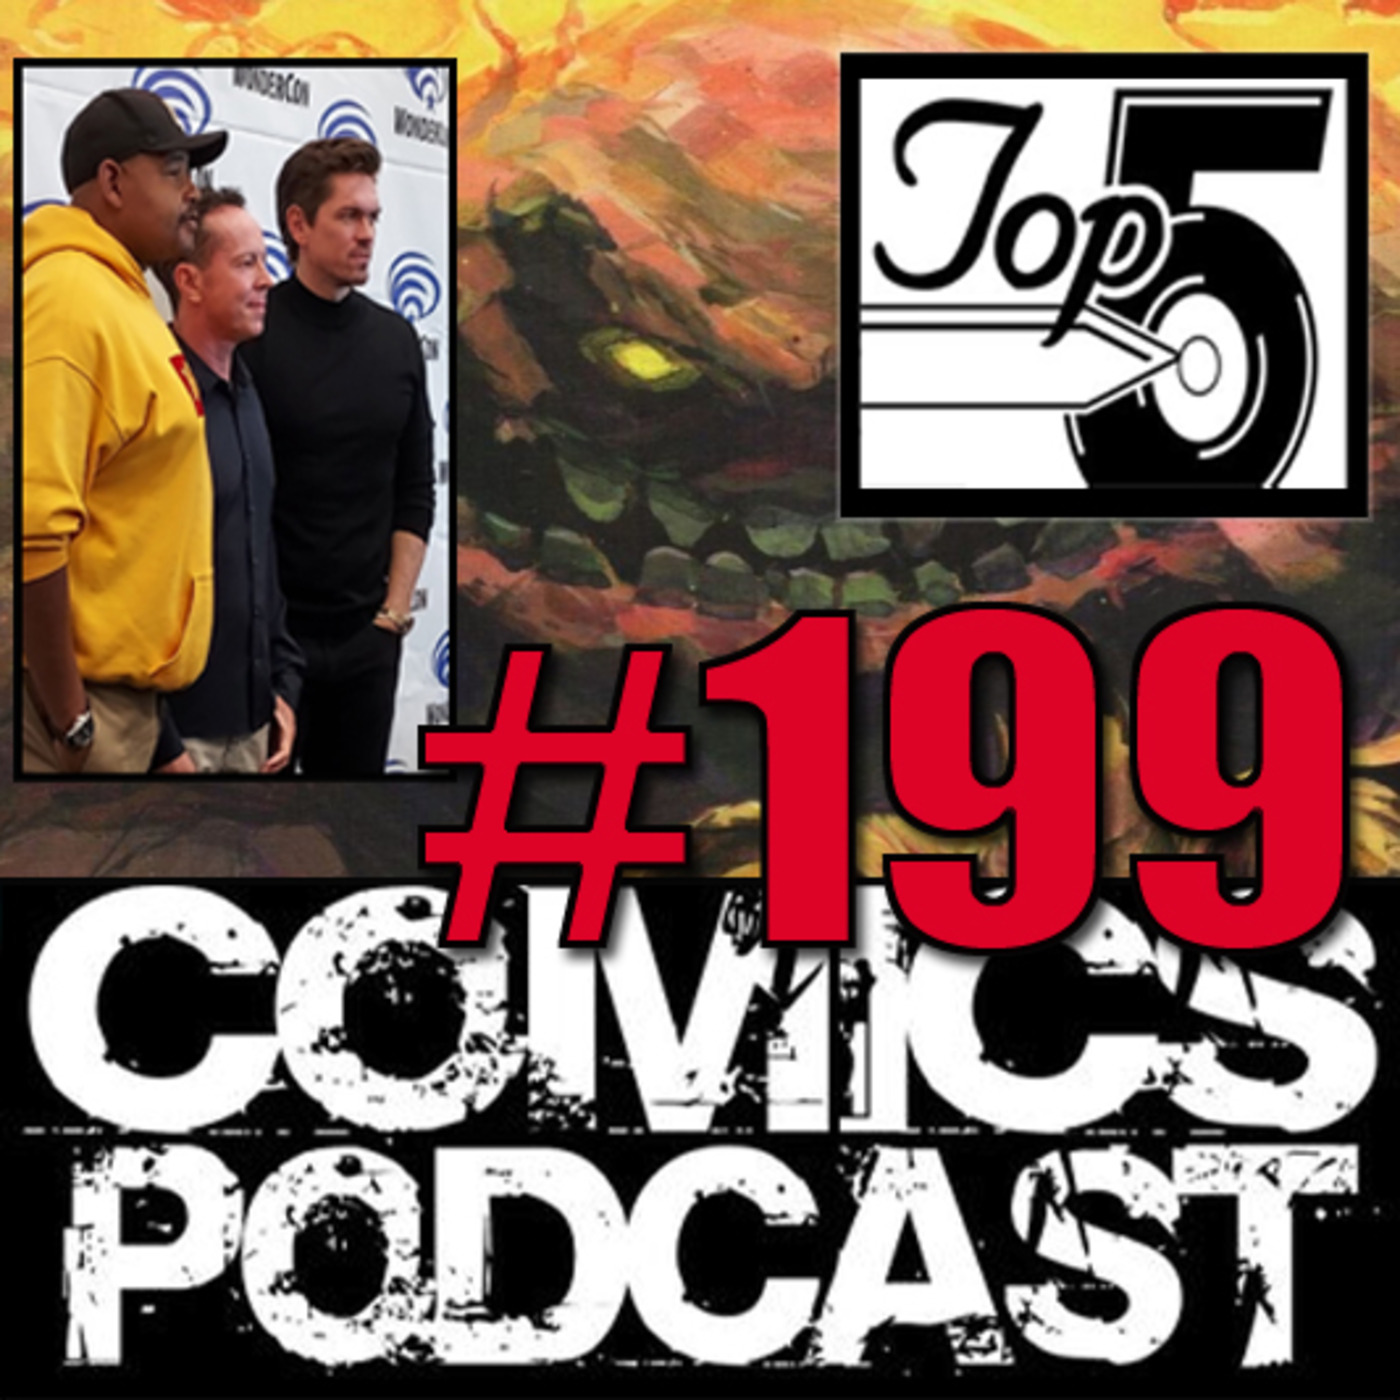 Episode 199: Top 5 Comics Podcast - Episode 199 - Clayface & Cast of Tv Series True Lies @ Wonder Con